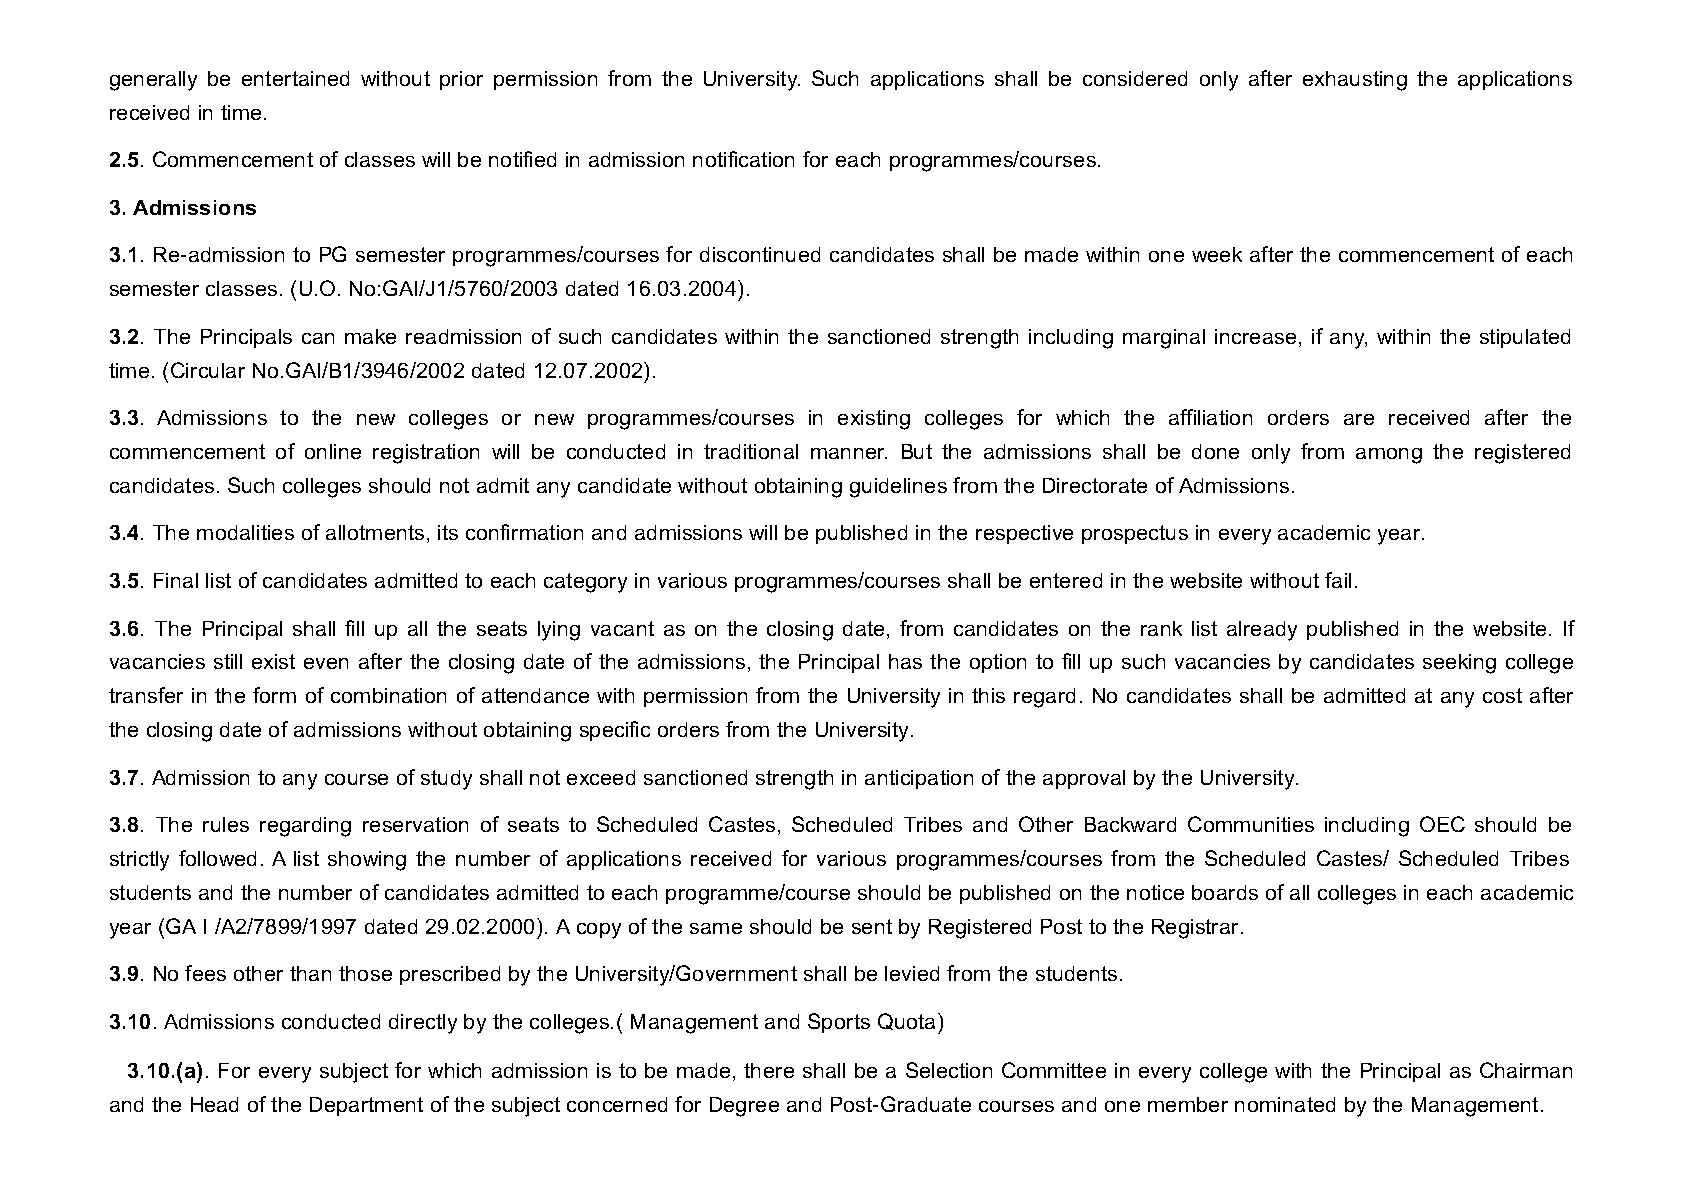 Calicut University Admission Rule for PG Programmes 2019 - Notification Image 2